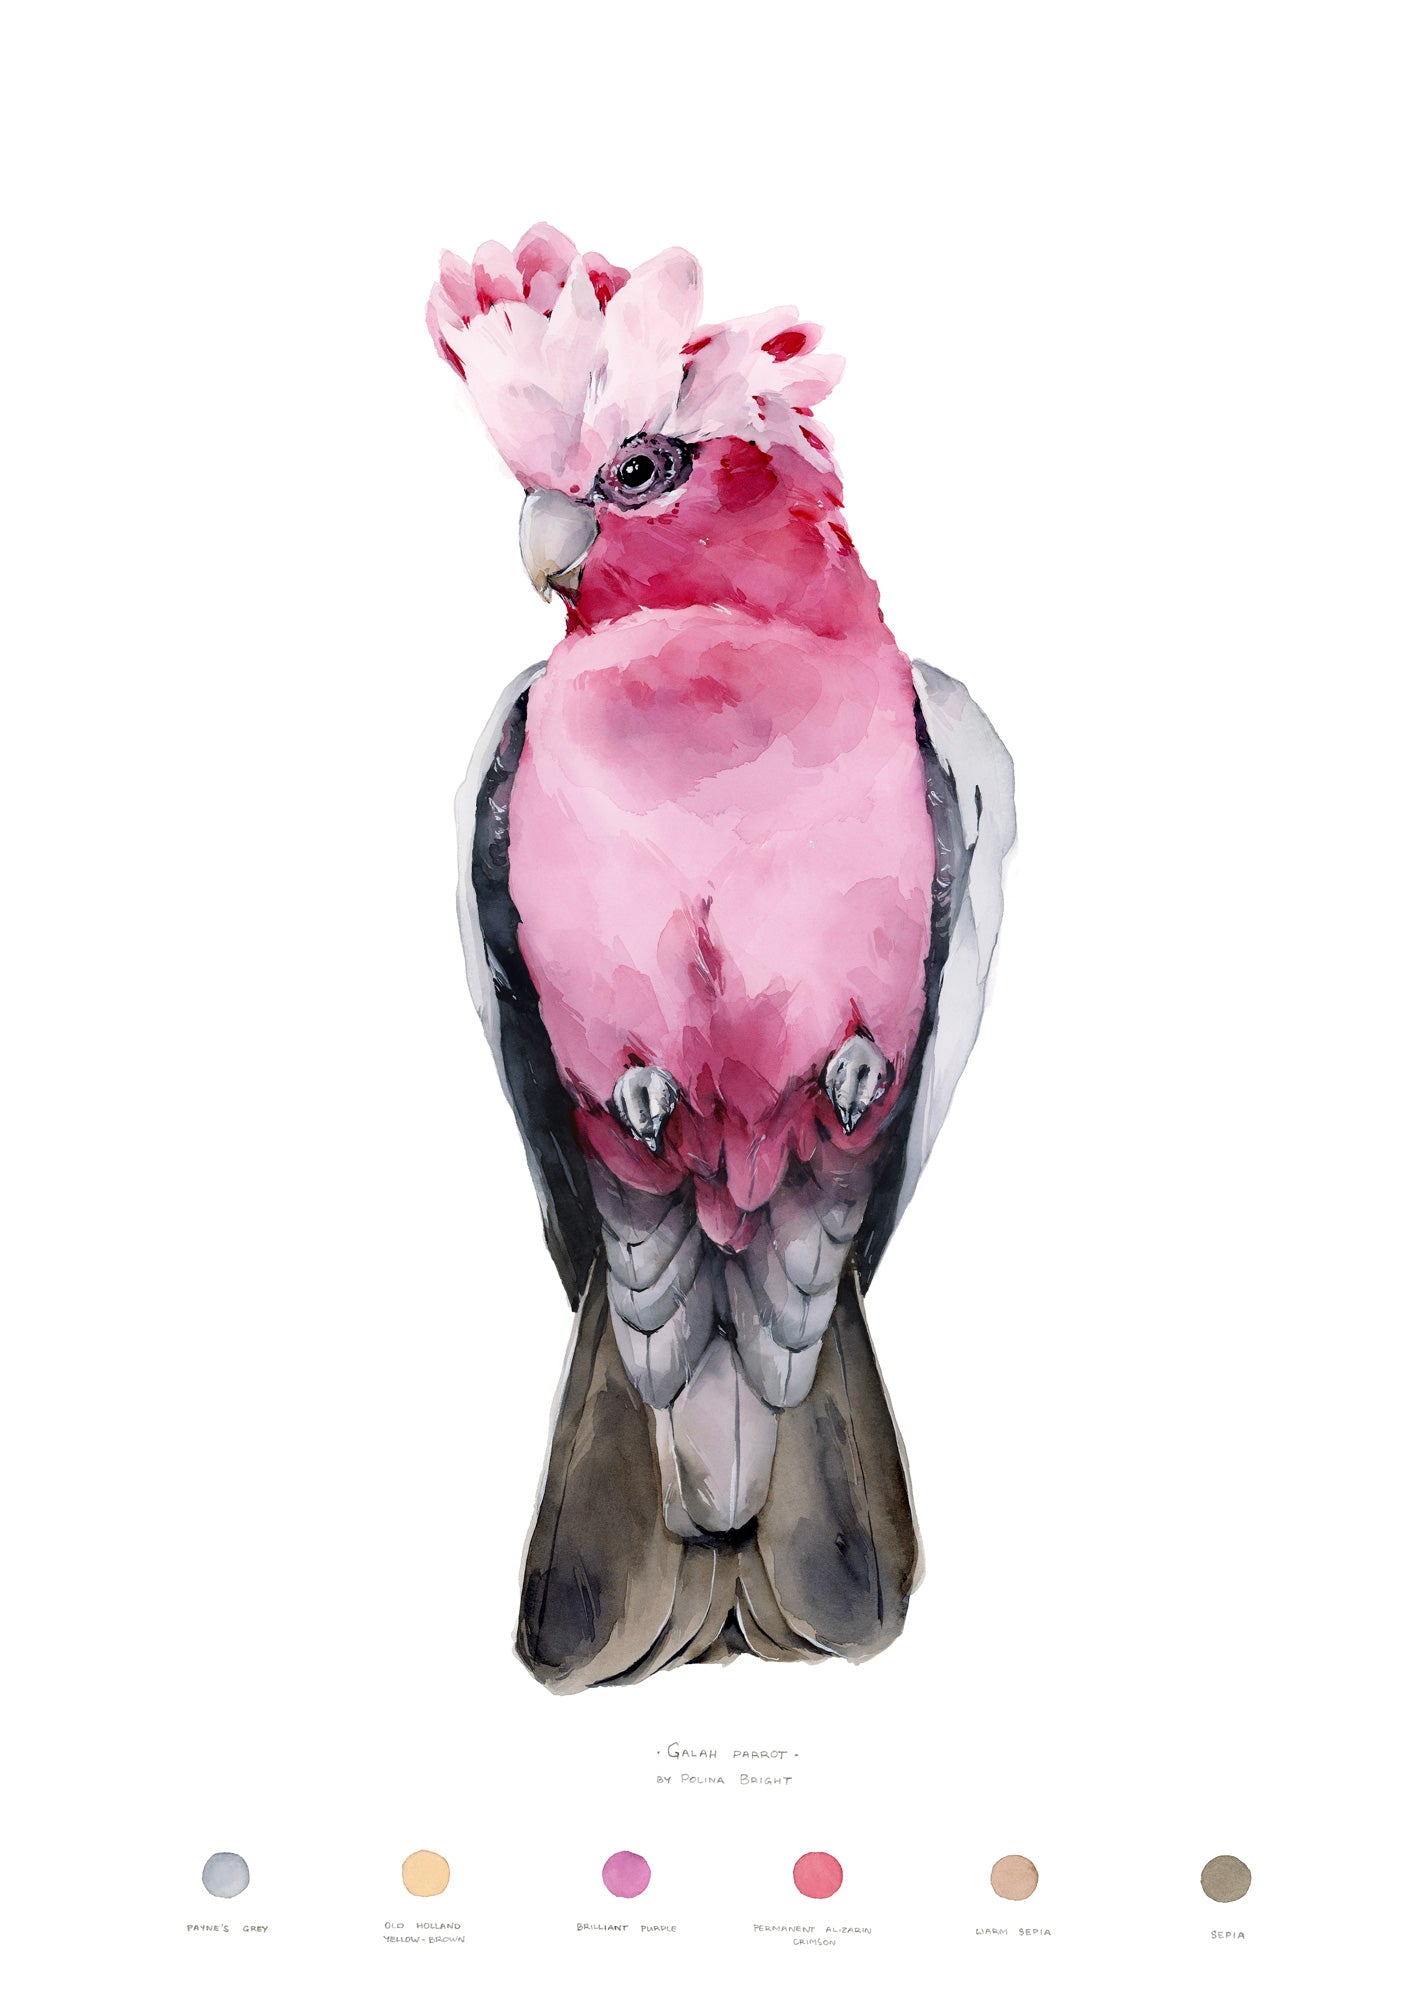 Galah Parrot by Polina Bright